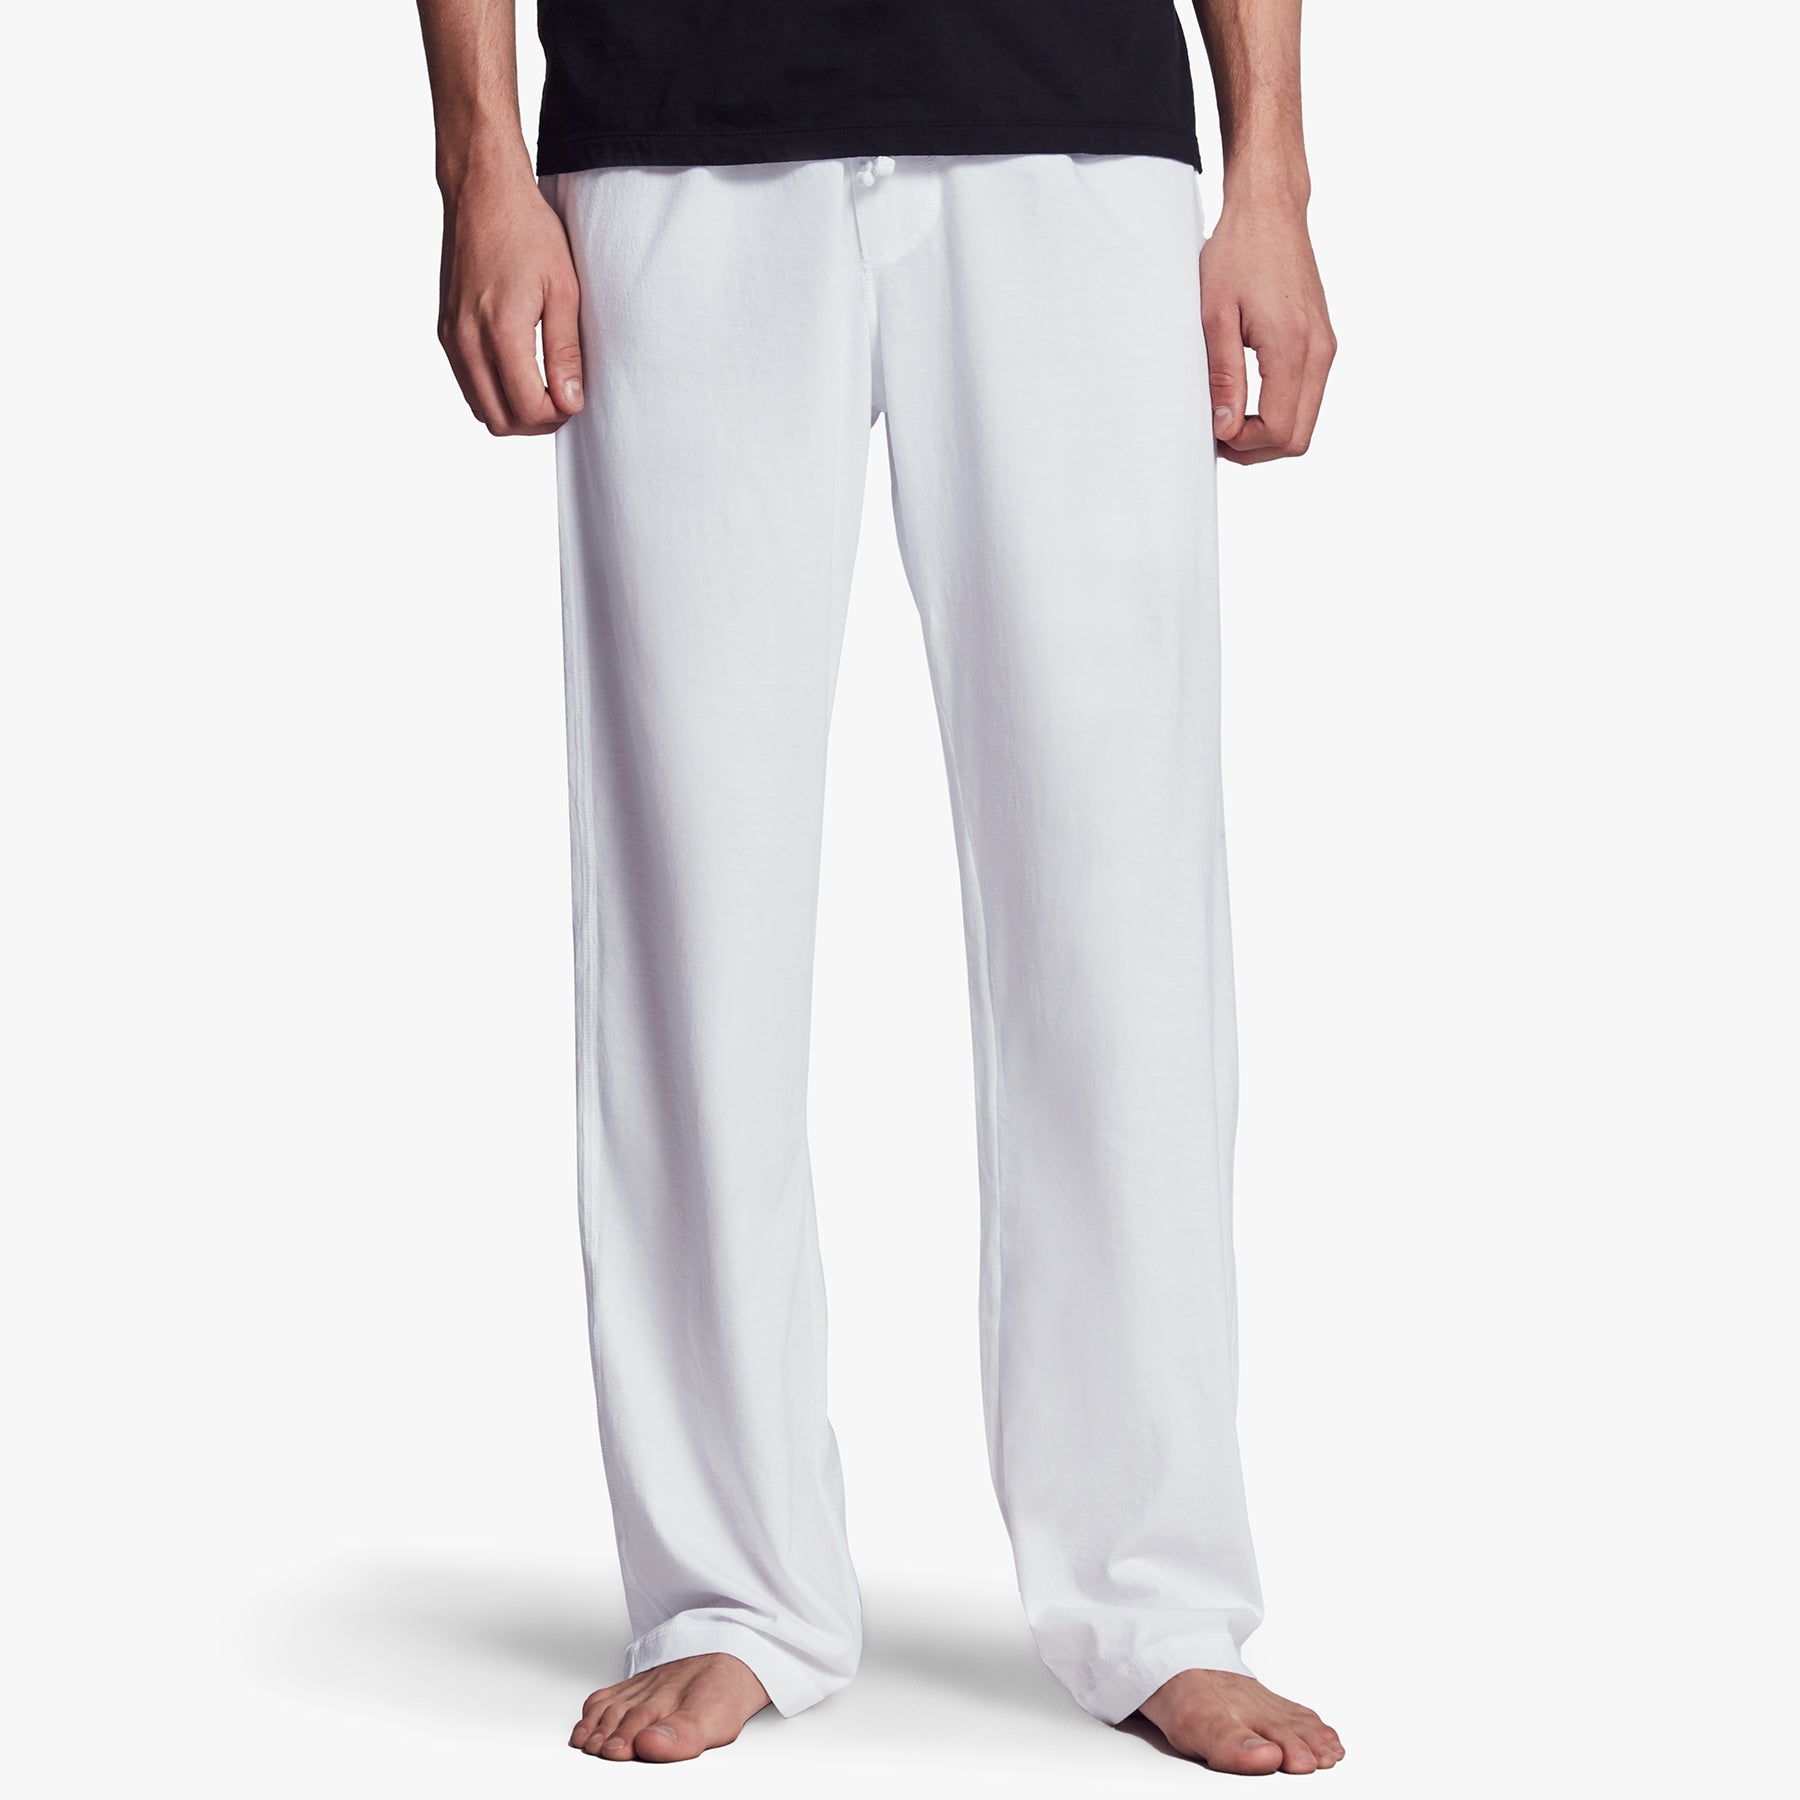 Black - Men's Silk Cotton Pajama Pants